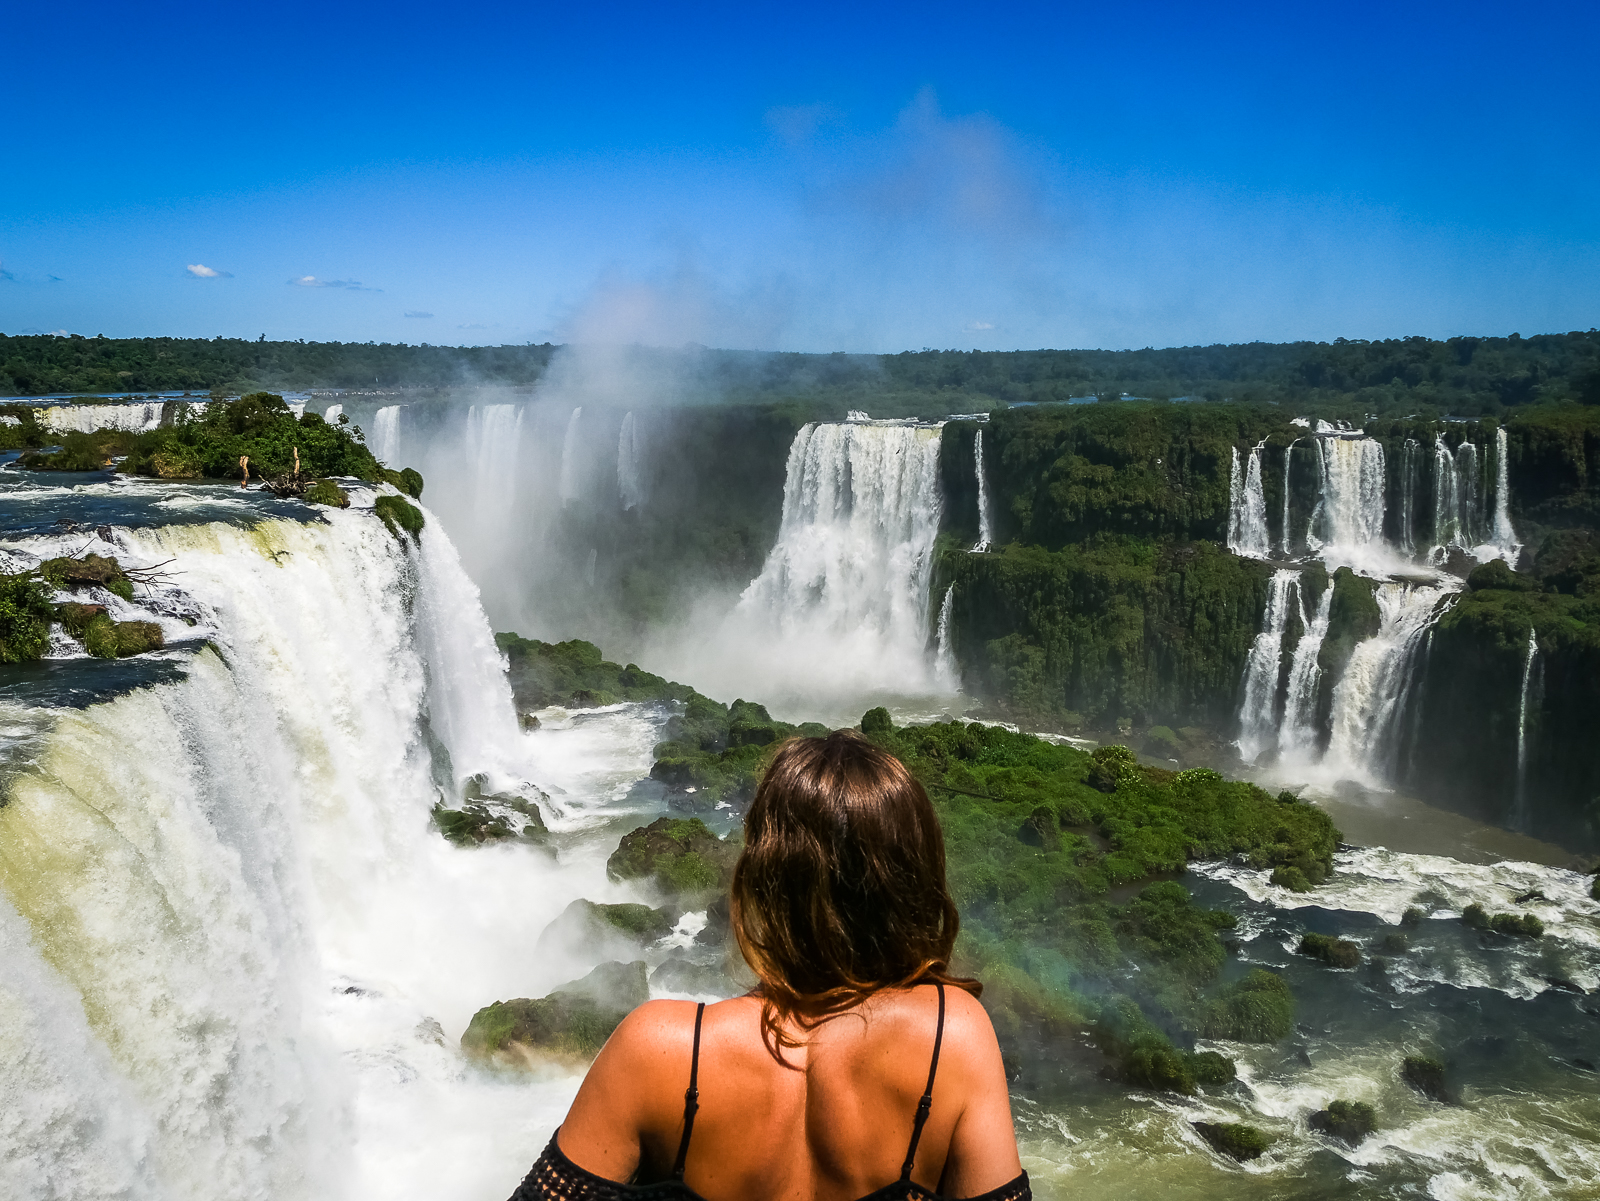 Iguazu Falls on the Brazil side